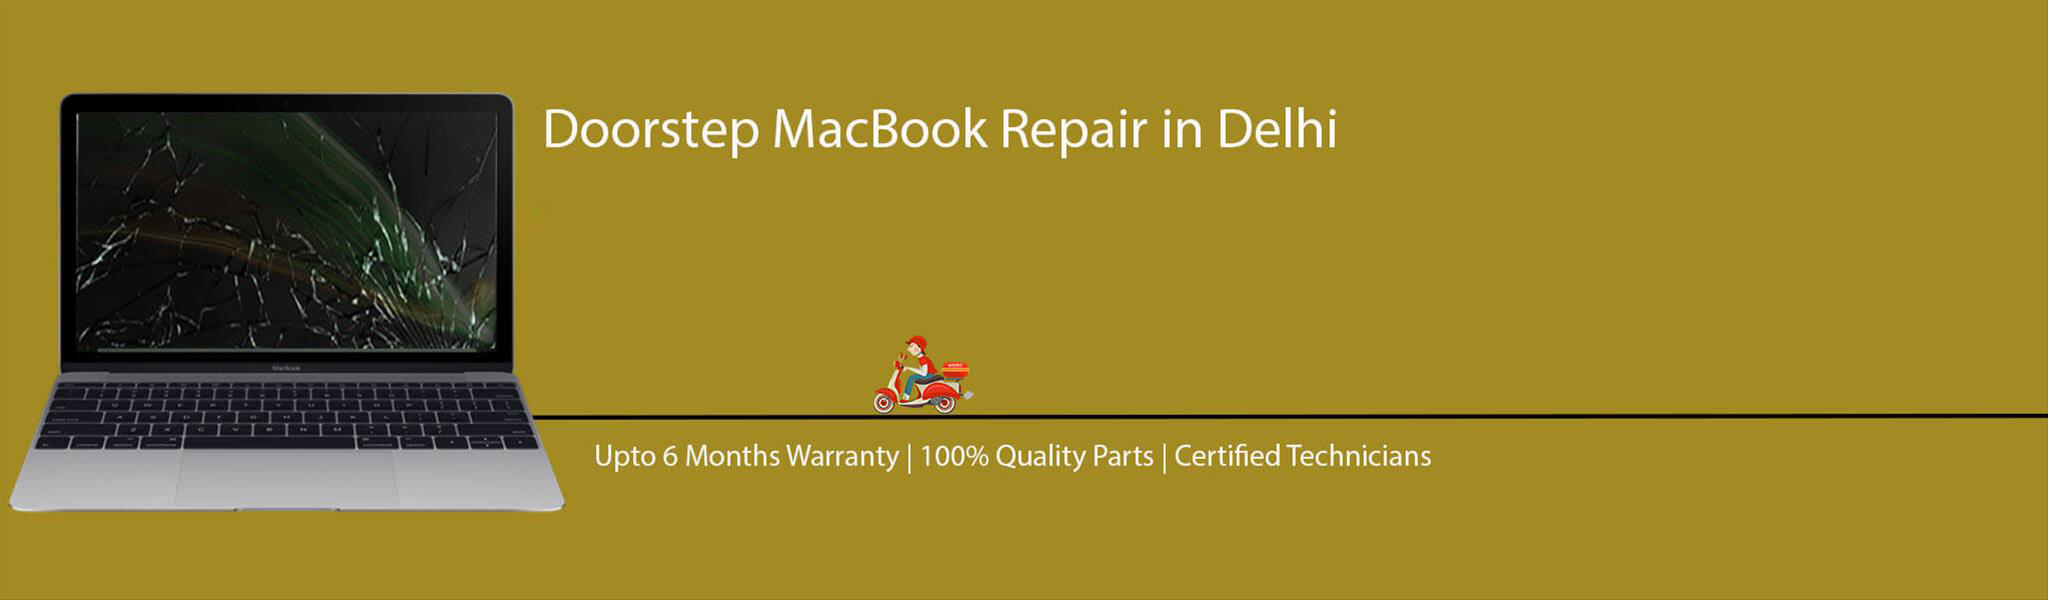 macbook-laptop-banner-delhi.jpg